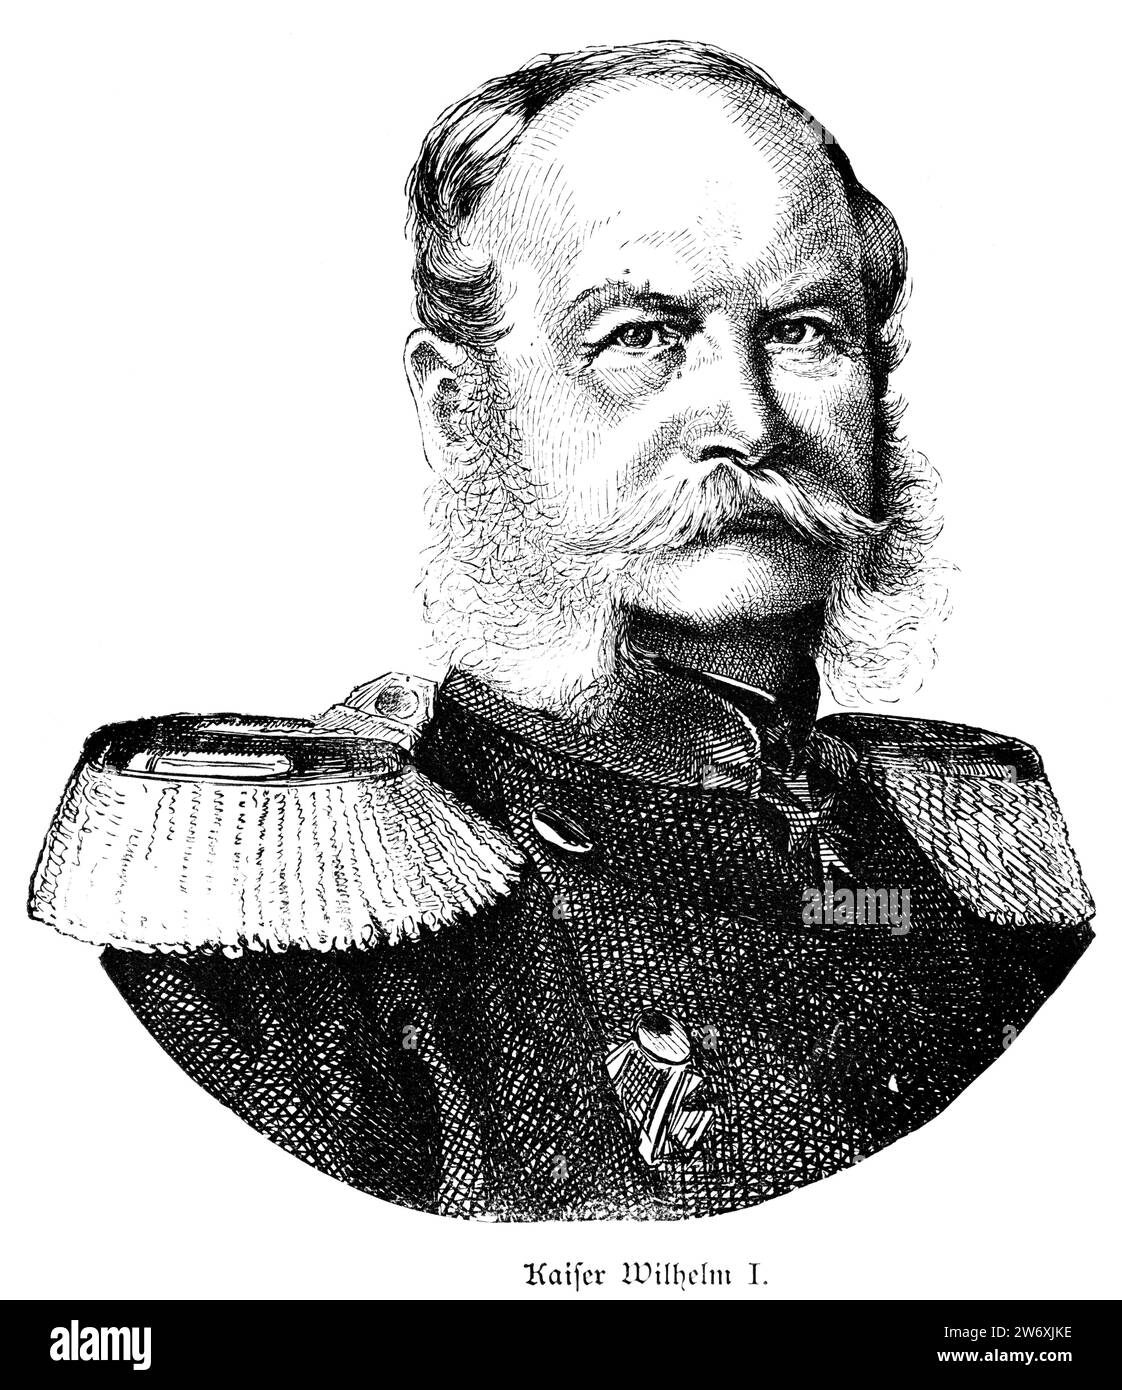 Empereur allemand Kaiser Wilhelm I, Berlin, Empire allemand, Europe Banque D'Images